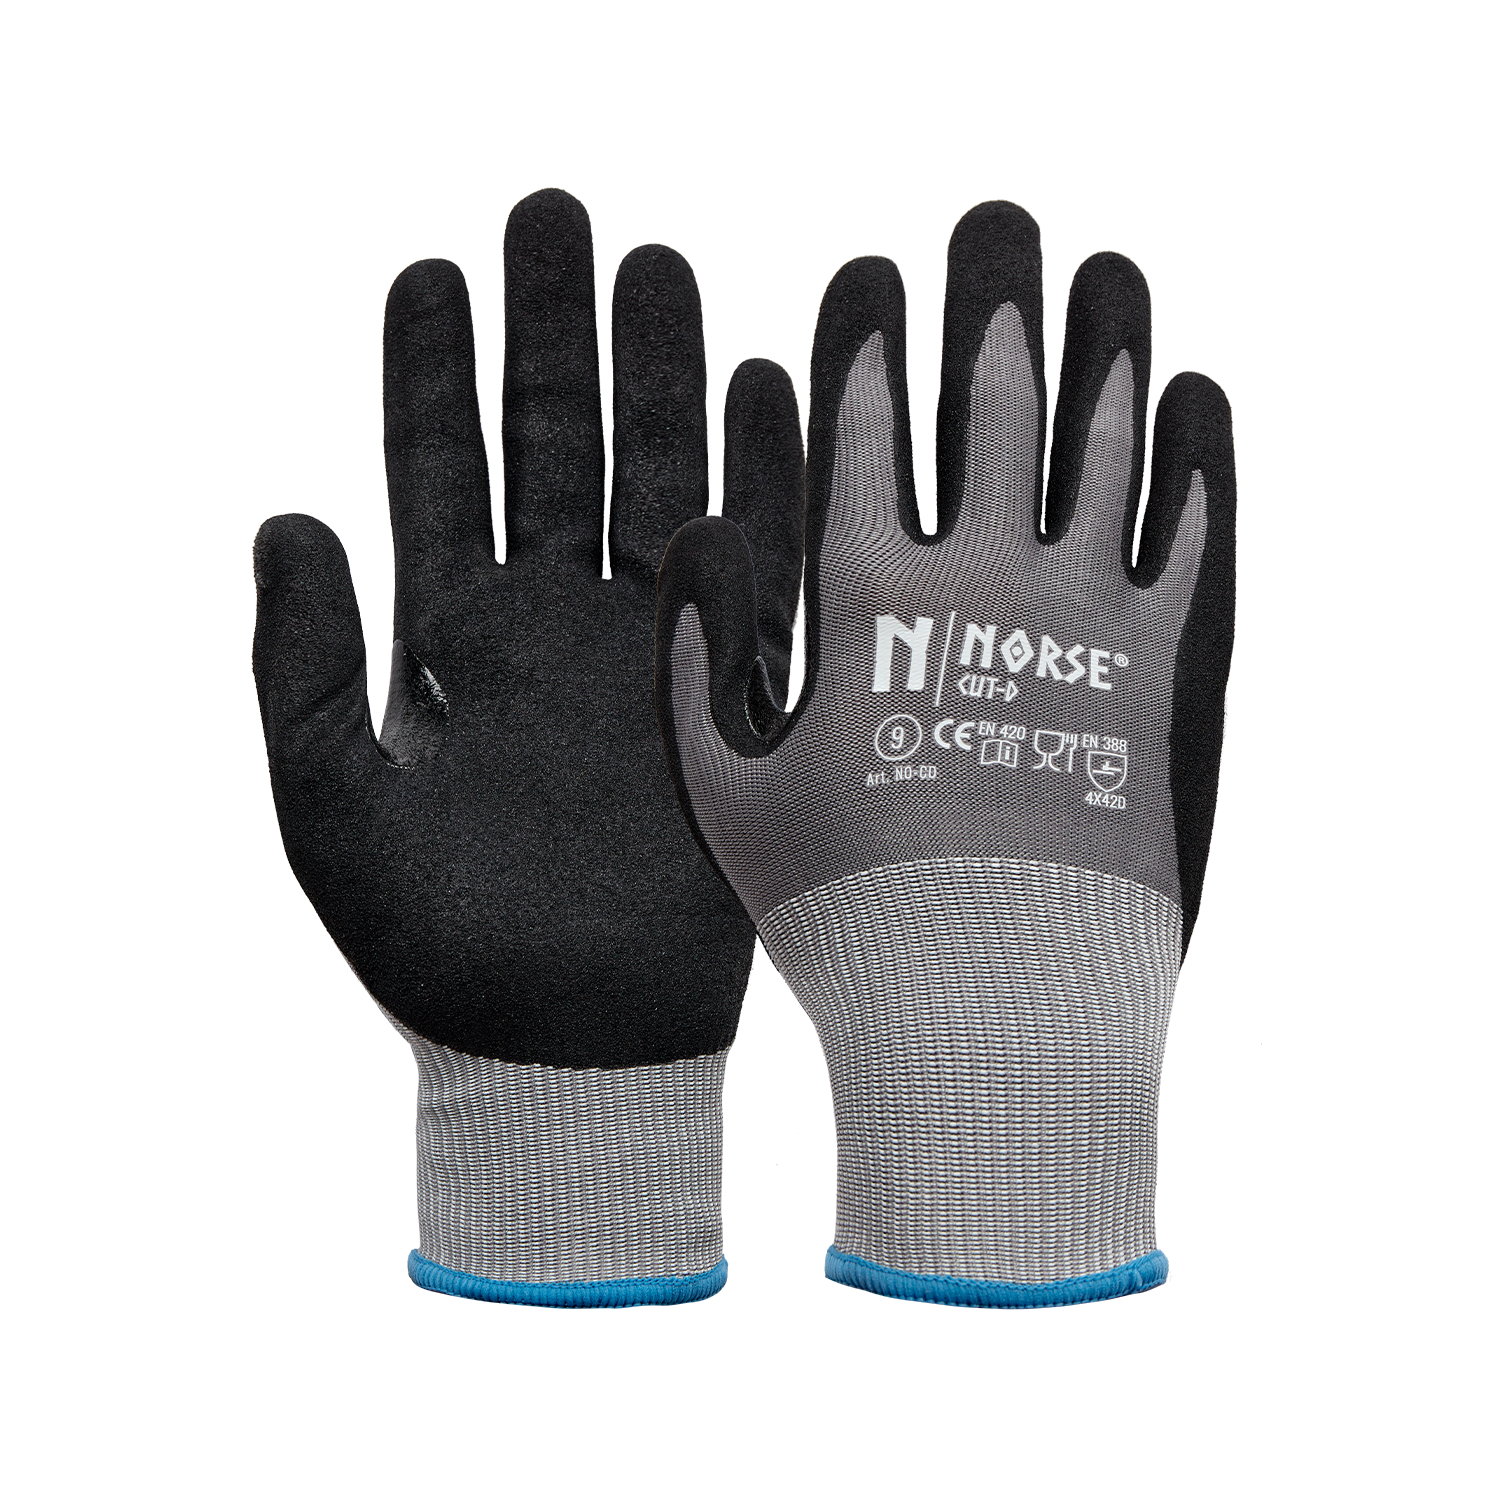 NORSE Cut-D cut-resistant assembly gloves size 9